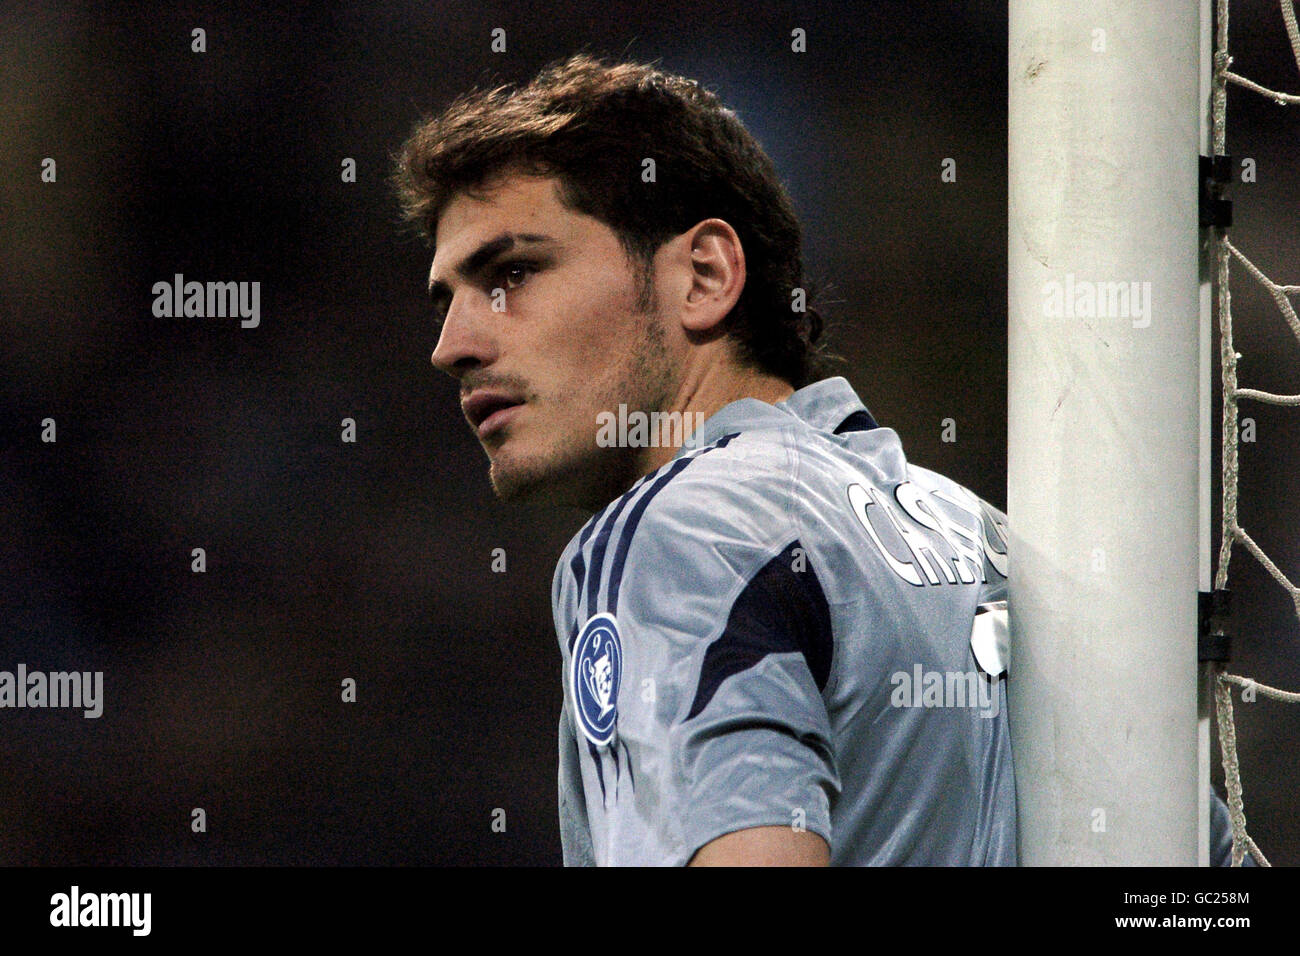 Soccer - UEFA Champions League - Group B - Real Madrid v Bayer Leverkusen. Iker Casillas, Real Madrid goalkeeper Stock Photo